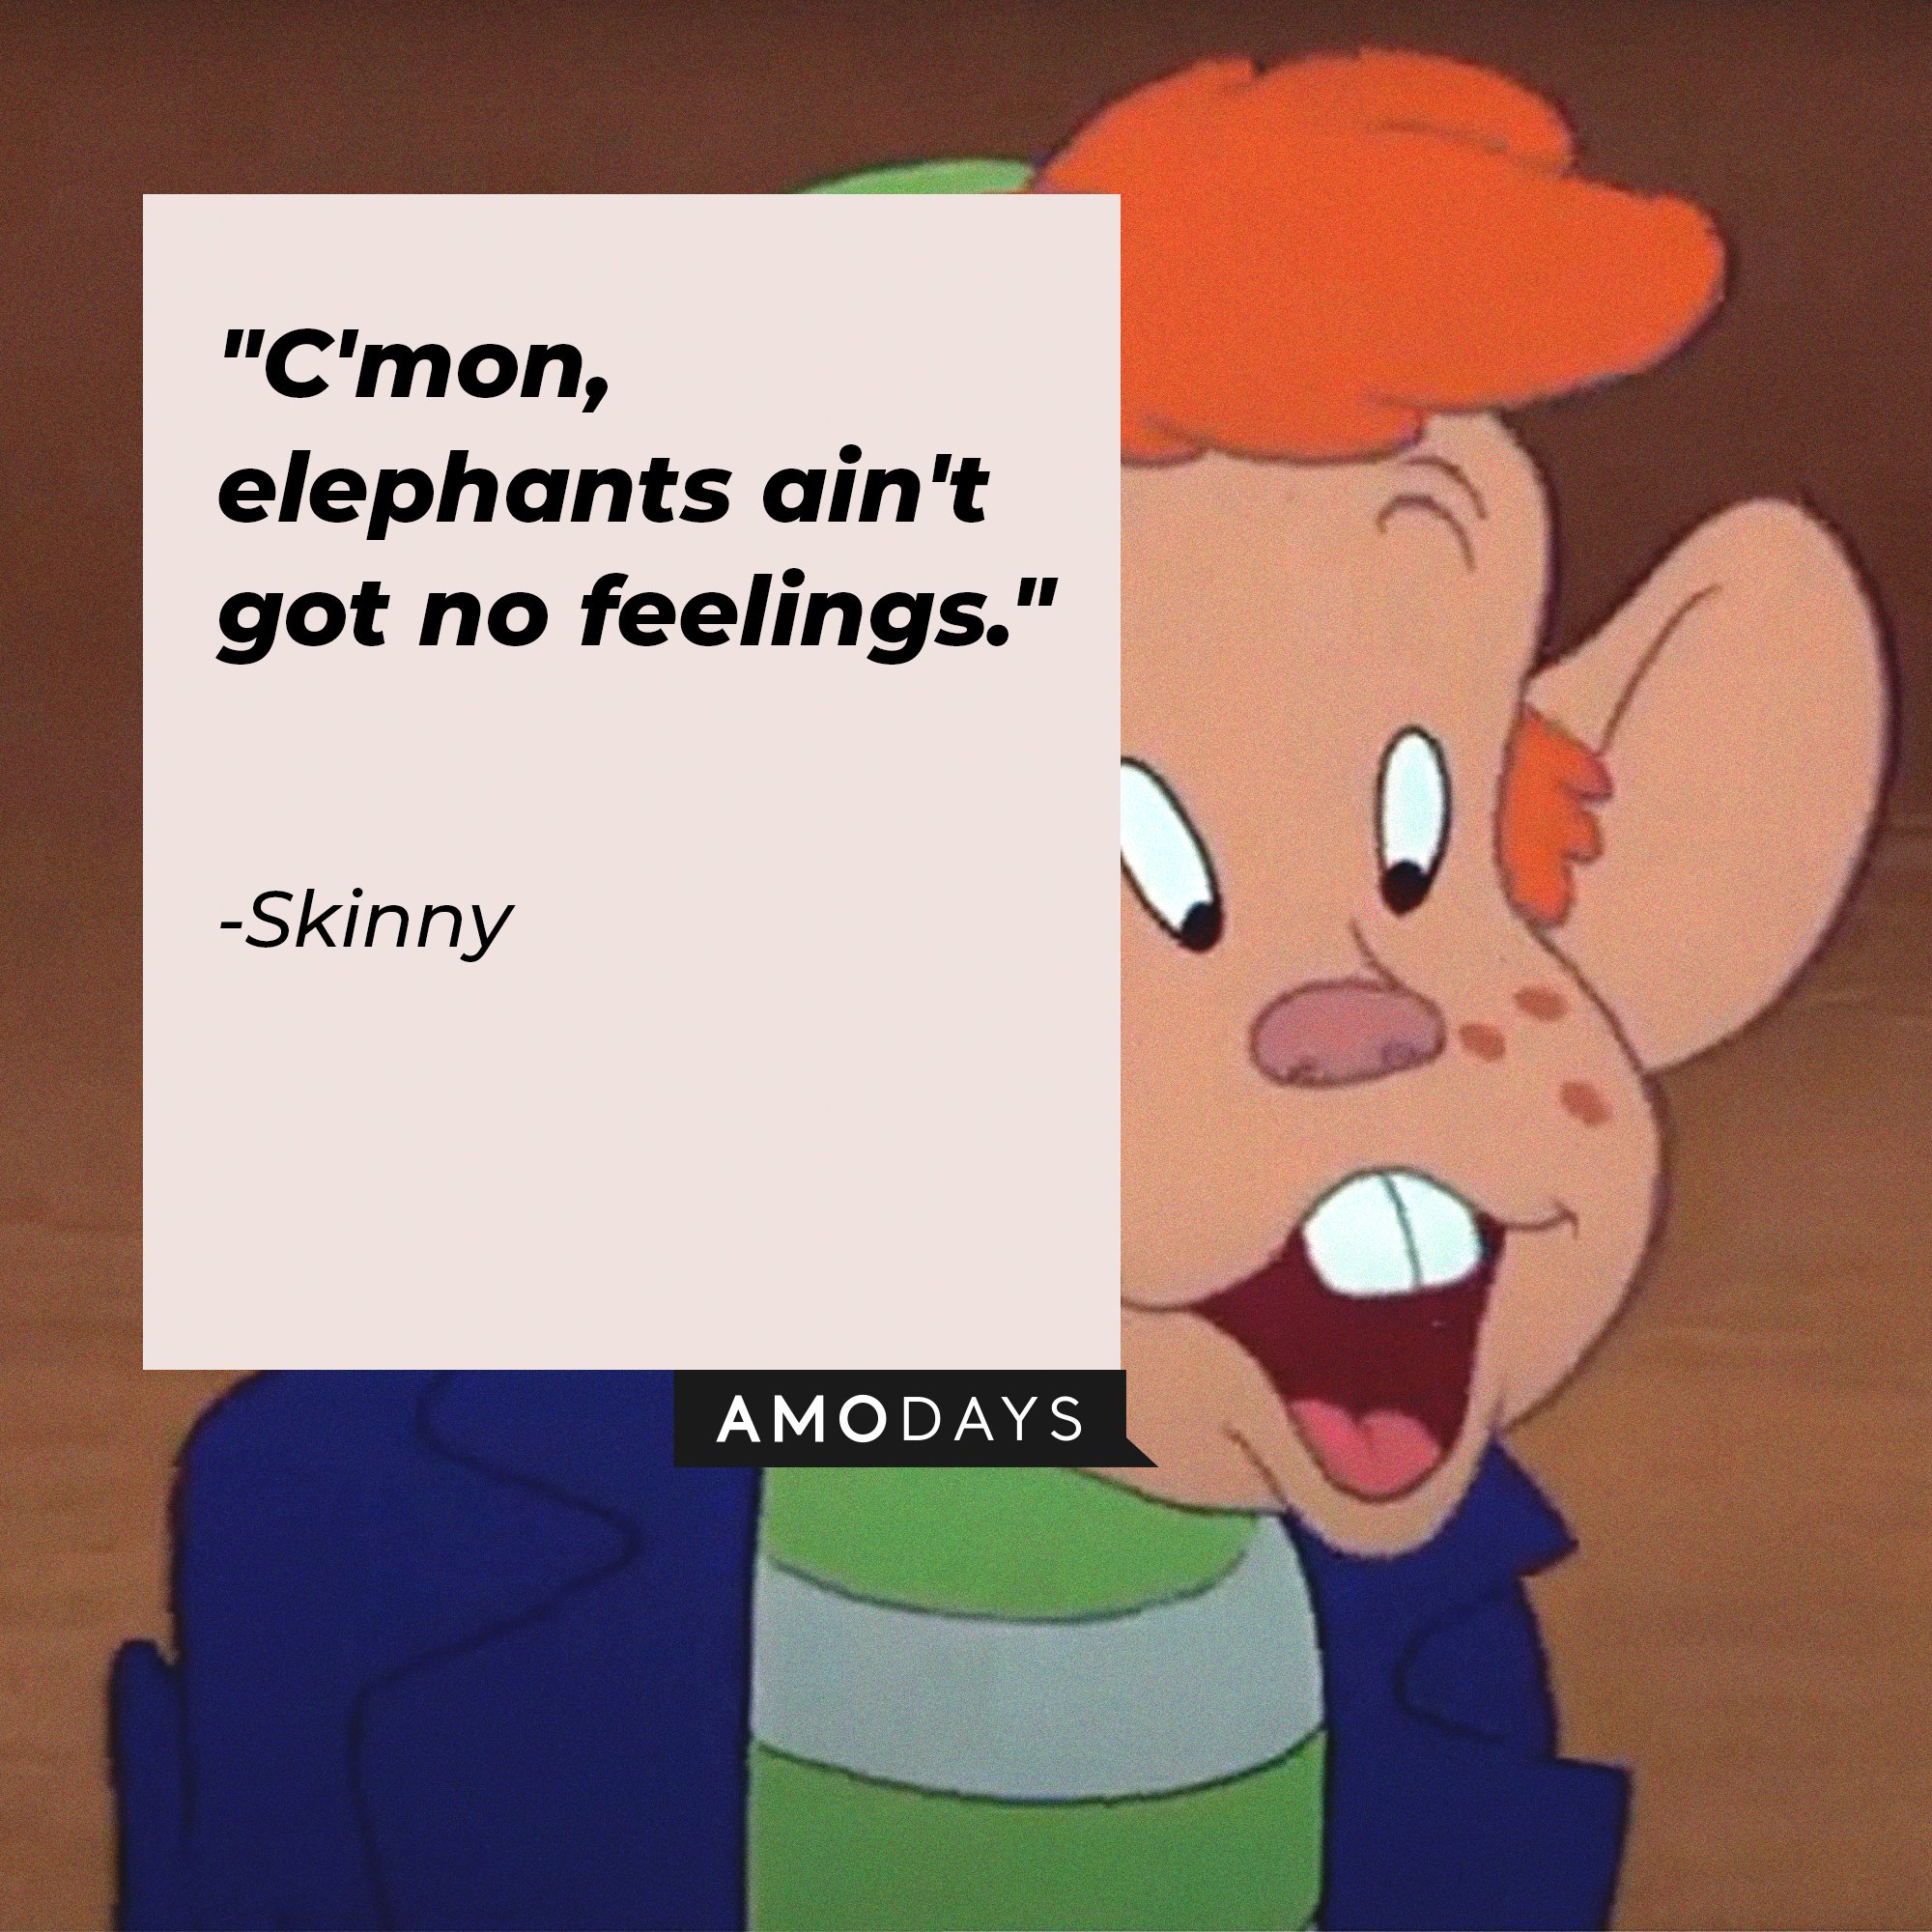 Skinny’s quote: "C'mon, elephants ain't got no feelings."  | Image: AmoDays    